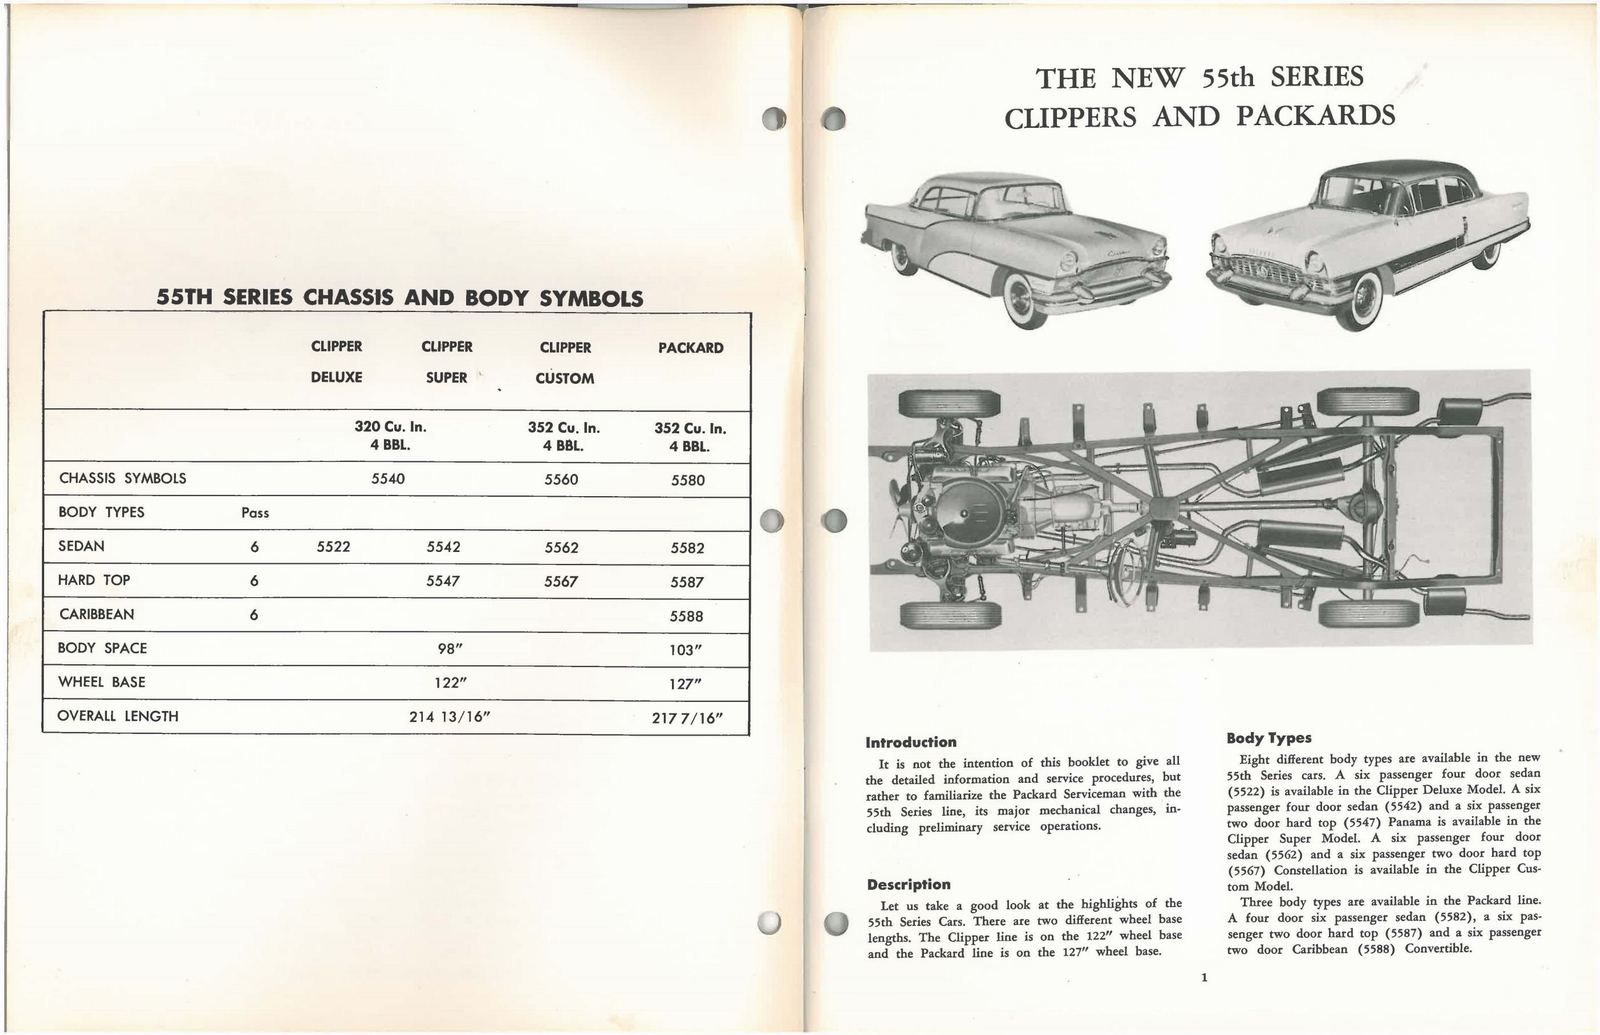 n_1955 Packard Sevicemens Training Book-00c-01.jpg